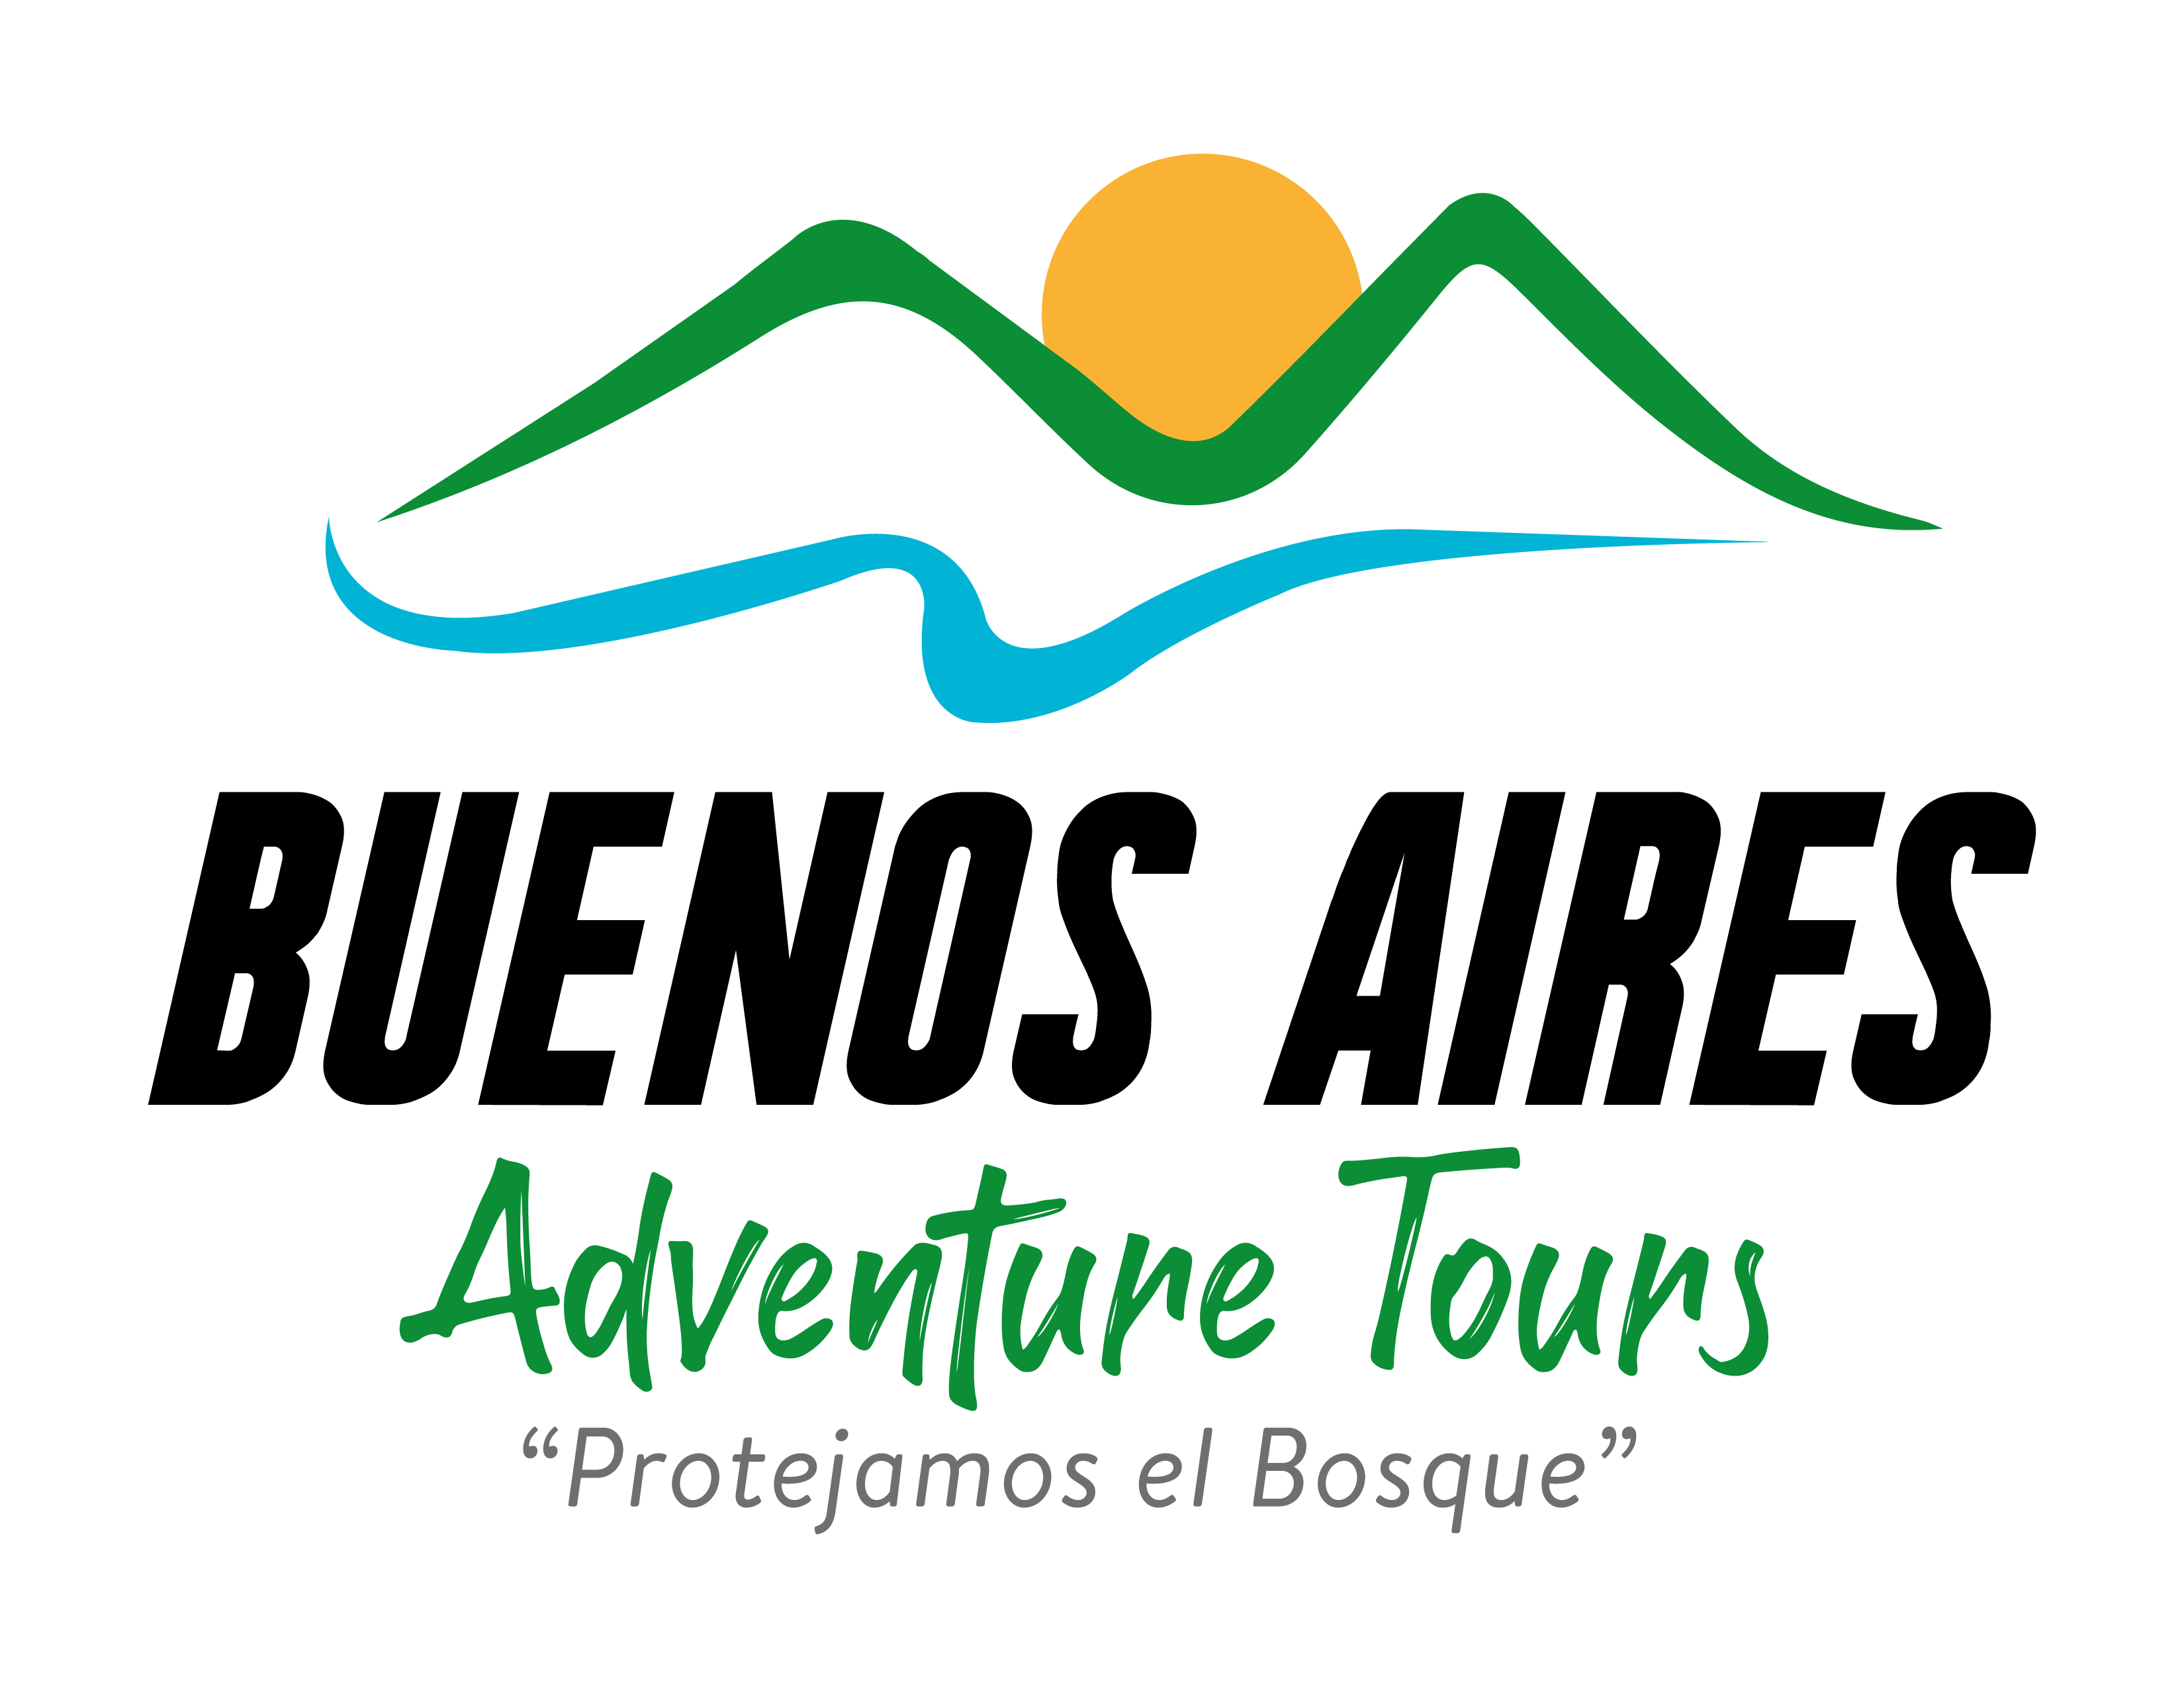 Buenos Aires Adventure Tours